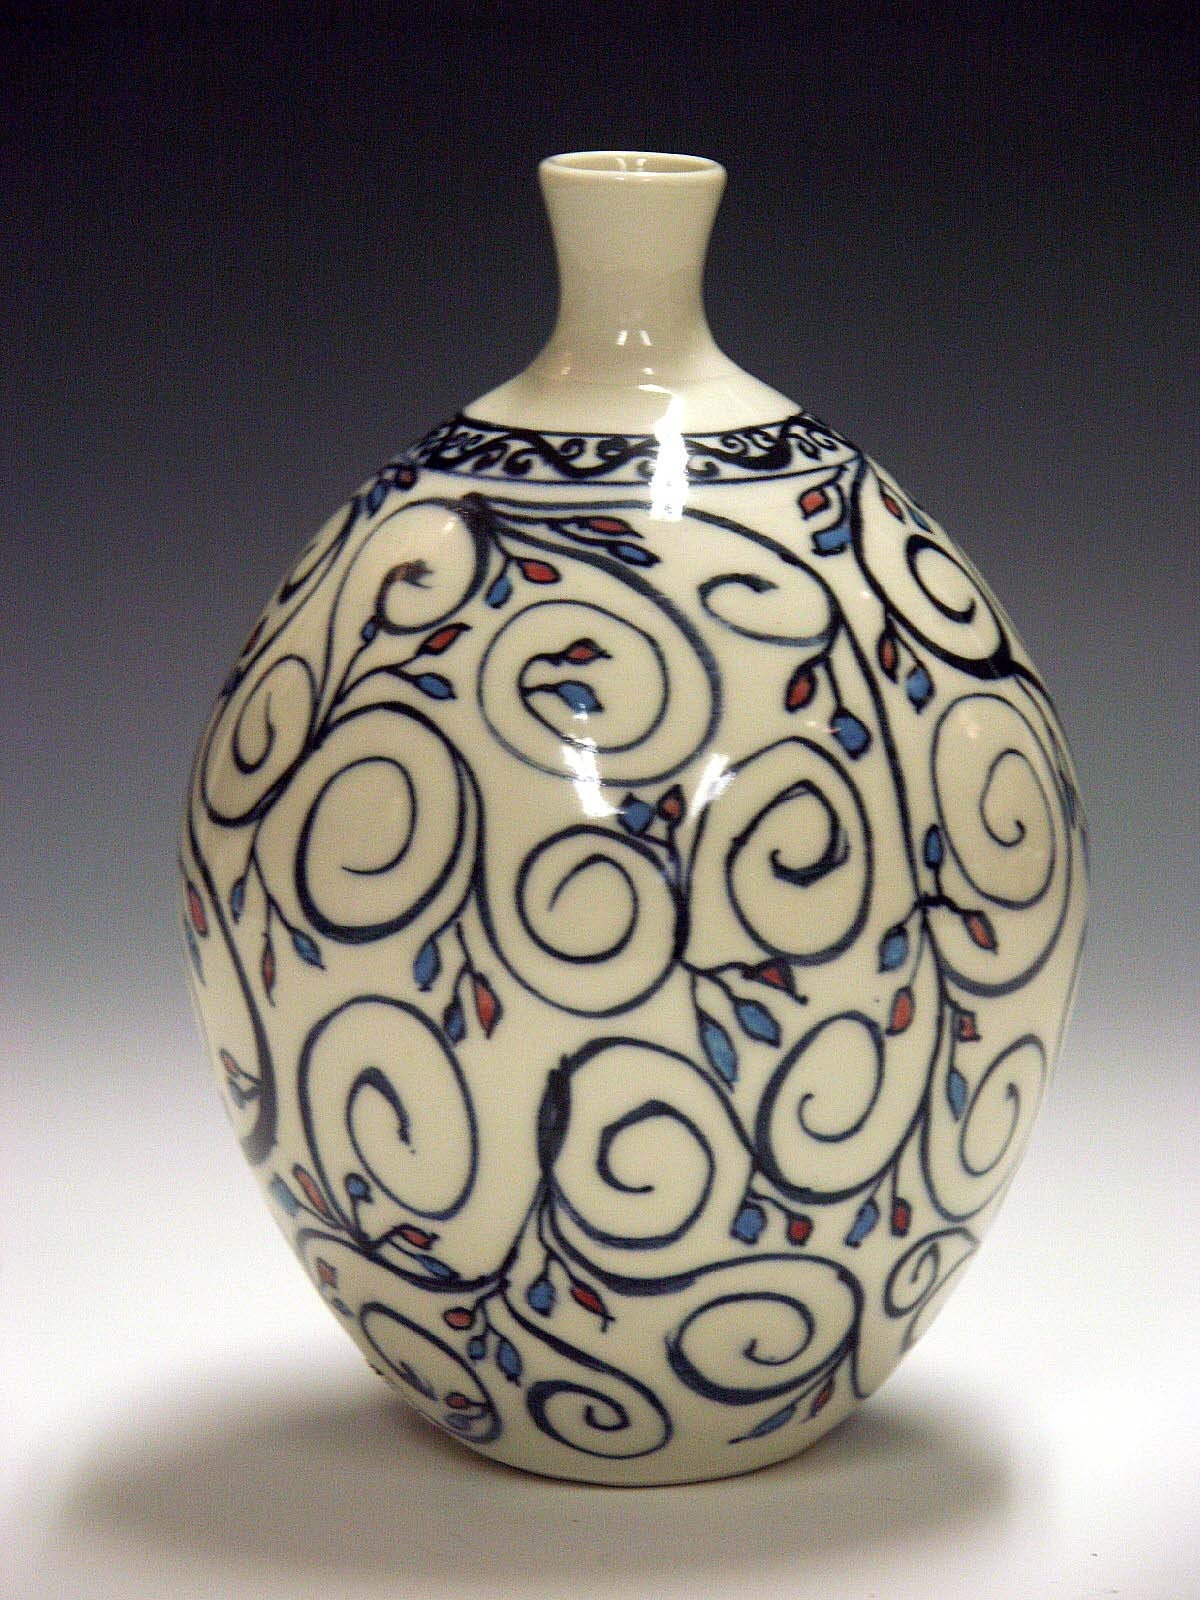 Exquisite Bottle Vase